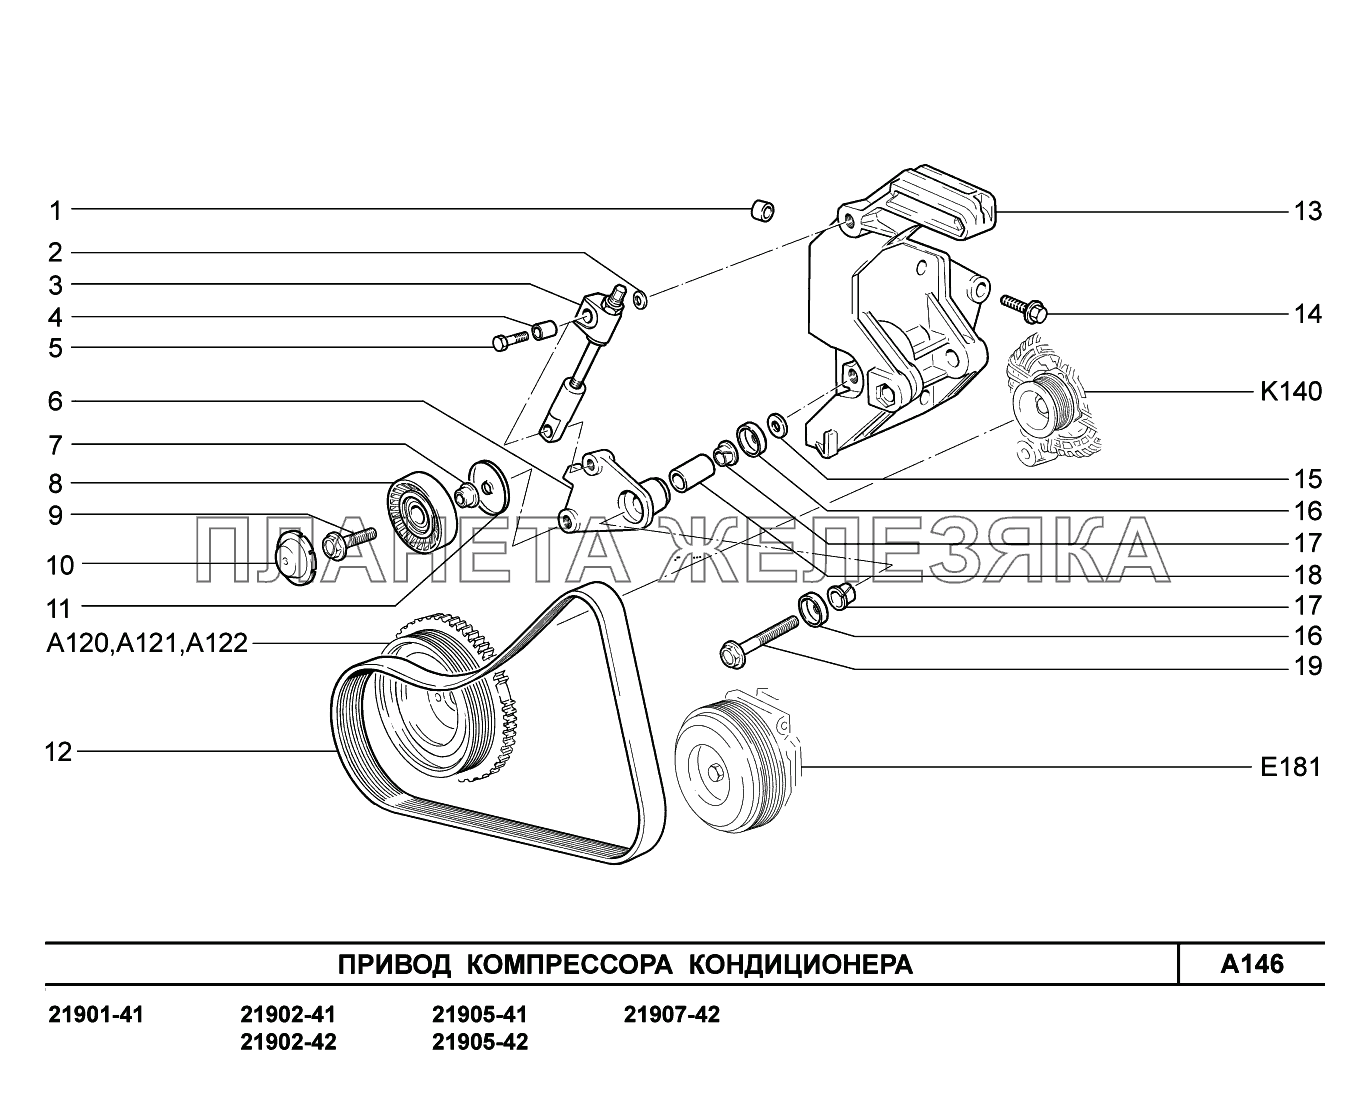 A146. Привод компрессора кондиционара Lada Granta-2190